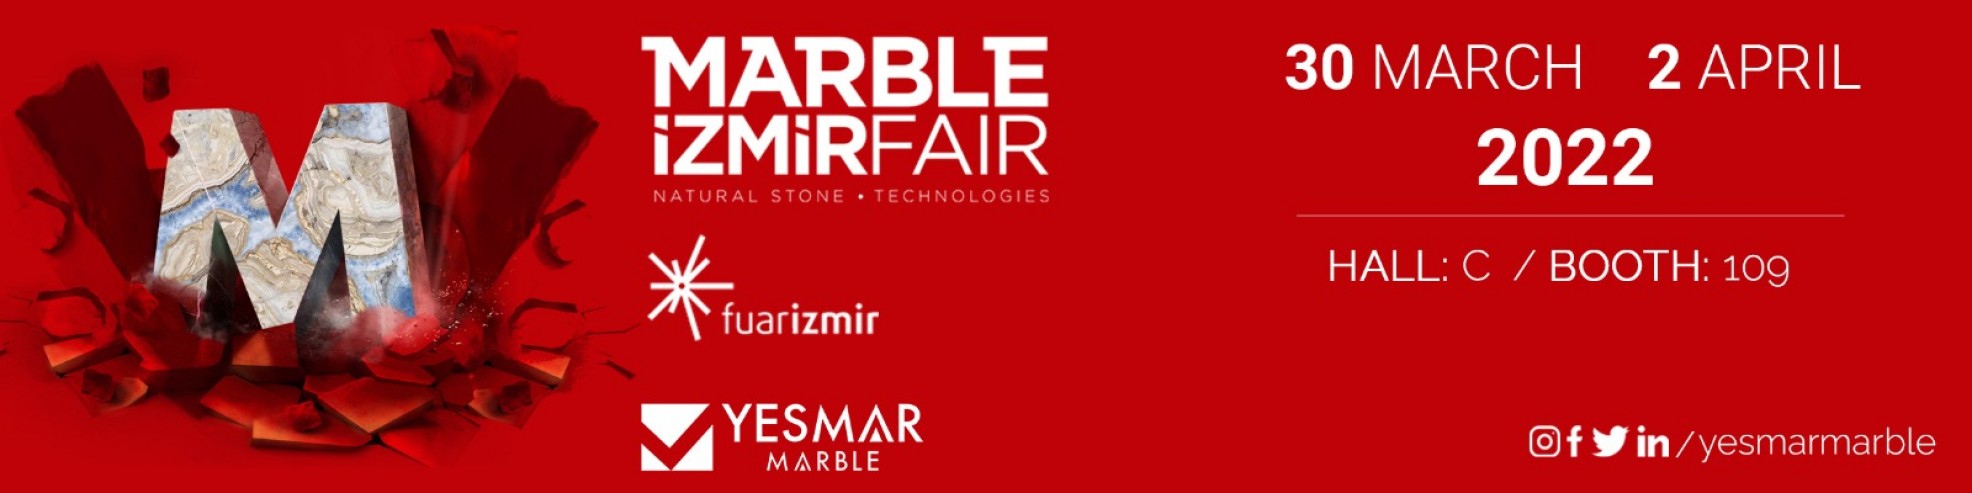 Marble Izmir Fair 2022